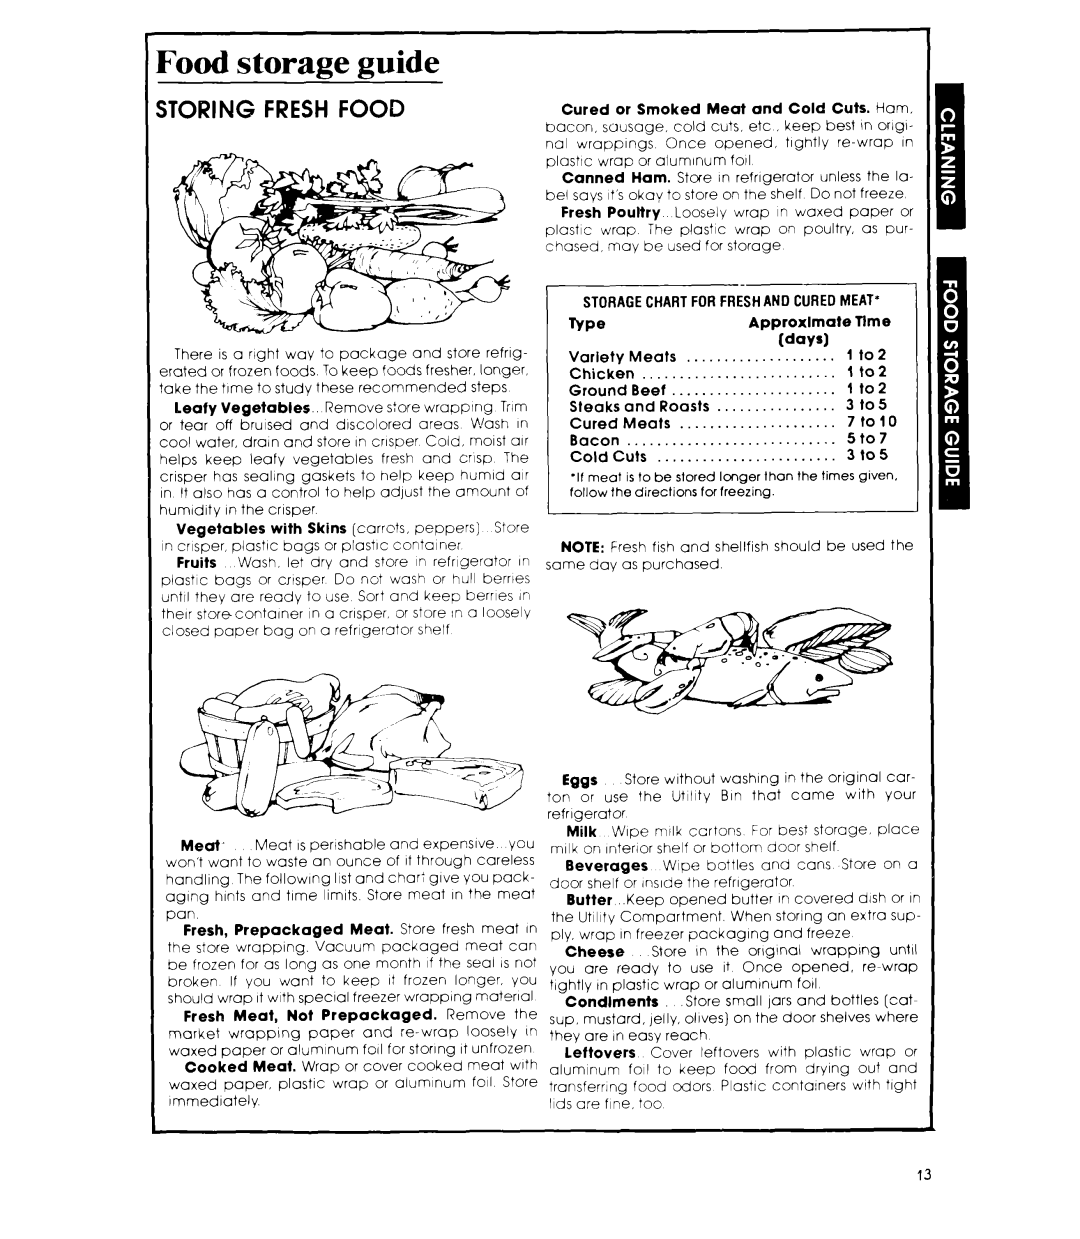 Whirlpool ED26SS manual Food storage guide, iTORlNG FRESH FOOD 